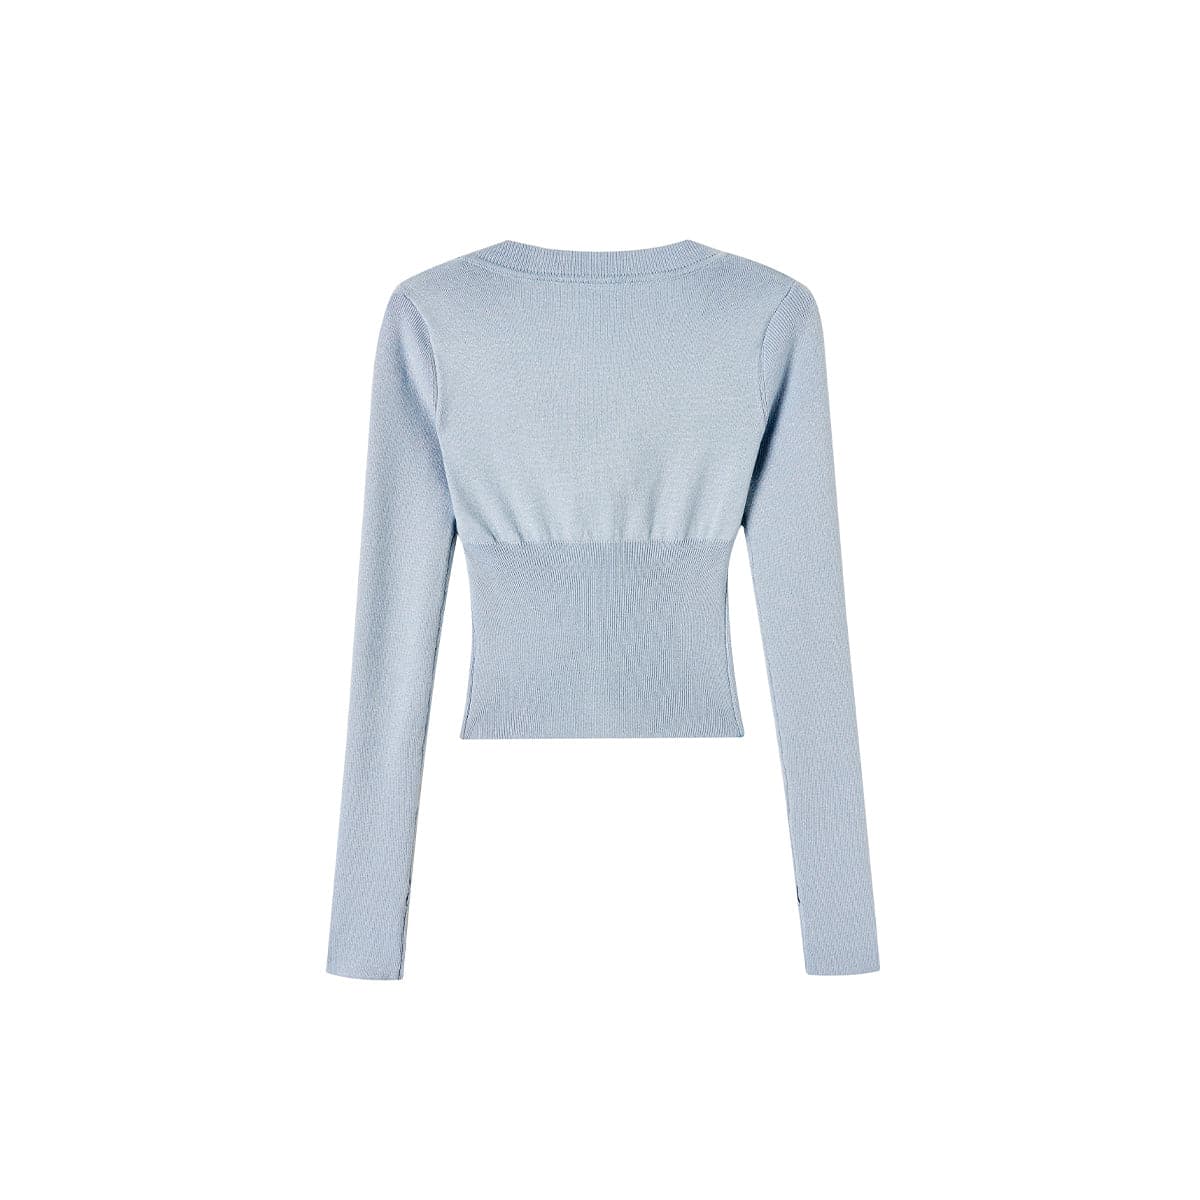 Blue Shiny Knit Top - 2-Piece Look - chiclara